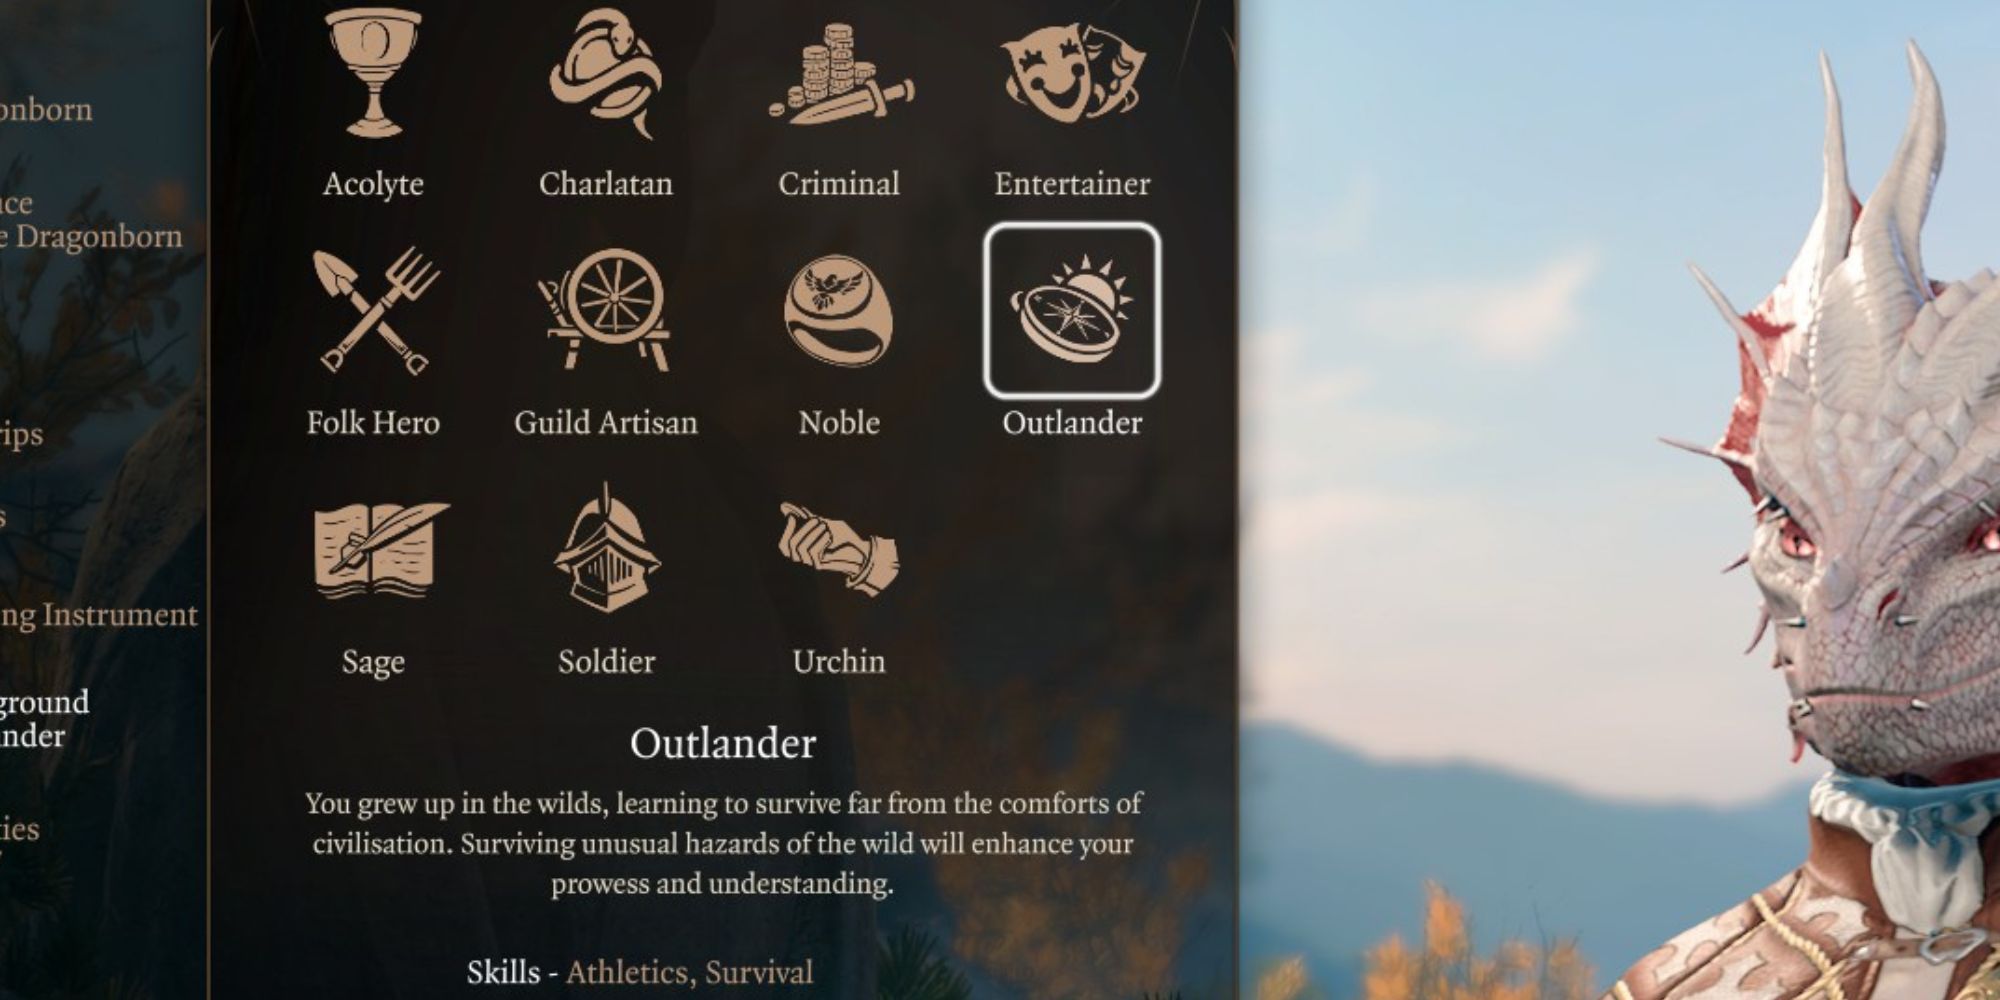 The Outlander background in Baldur's Gate 3